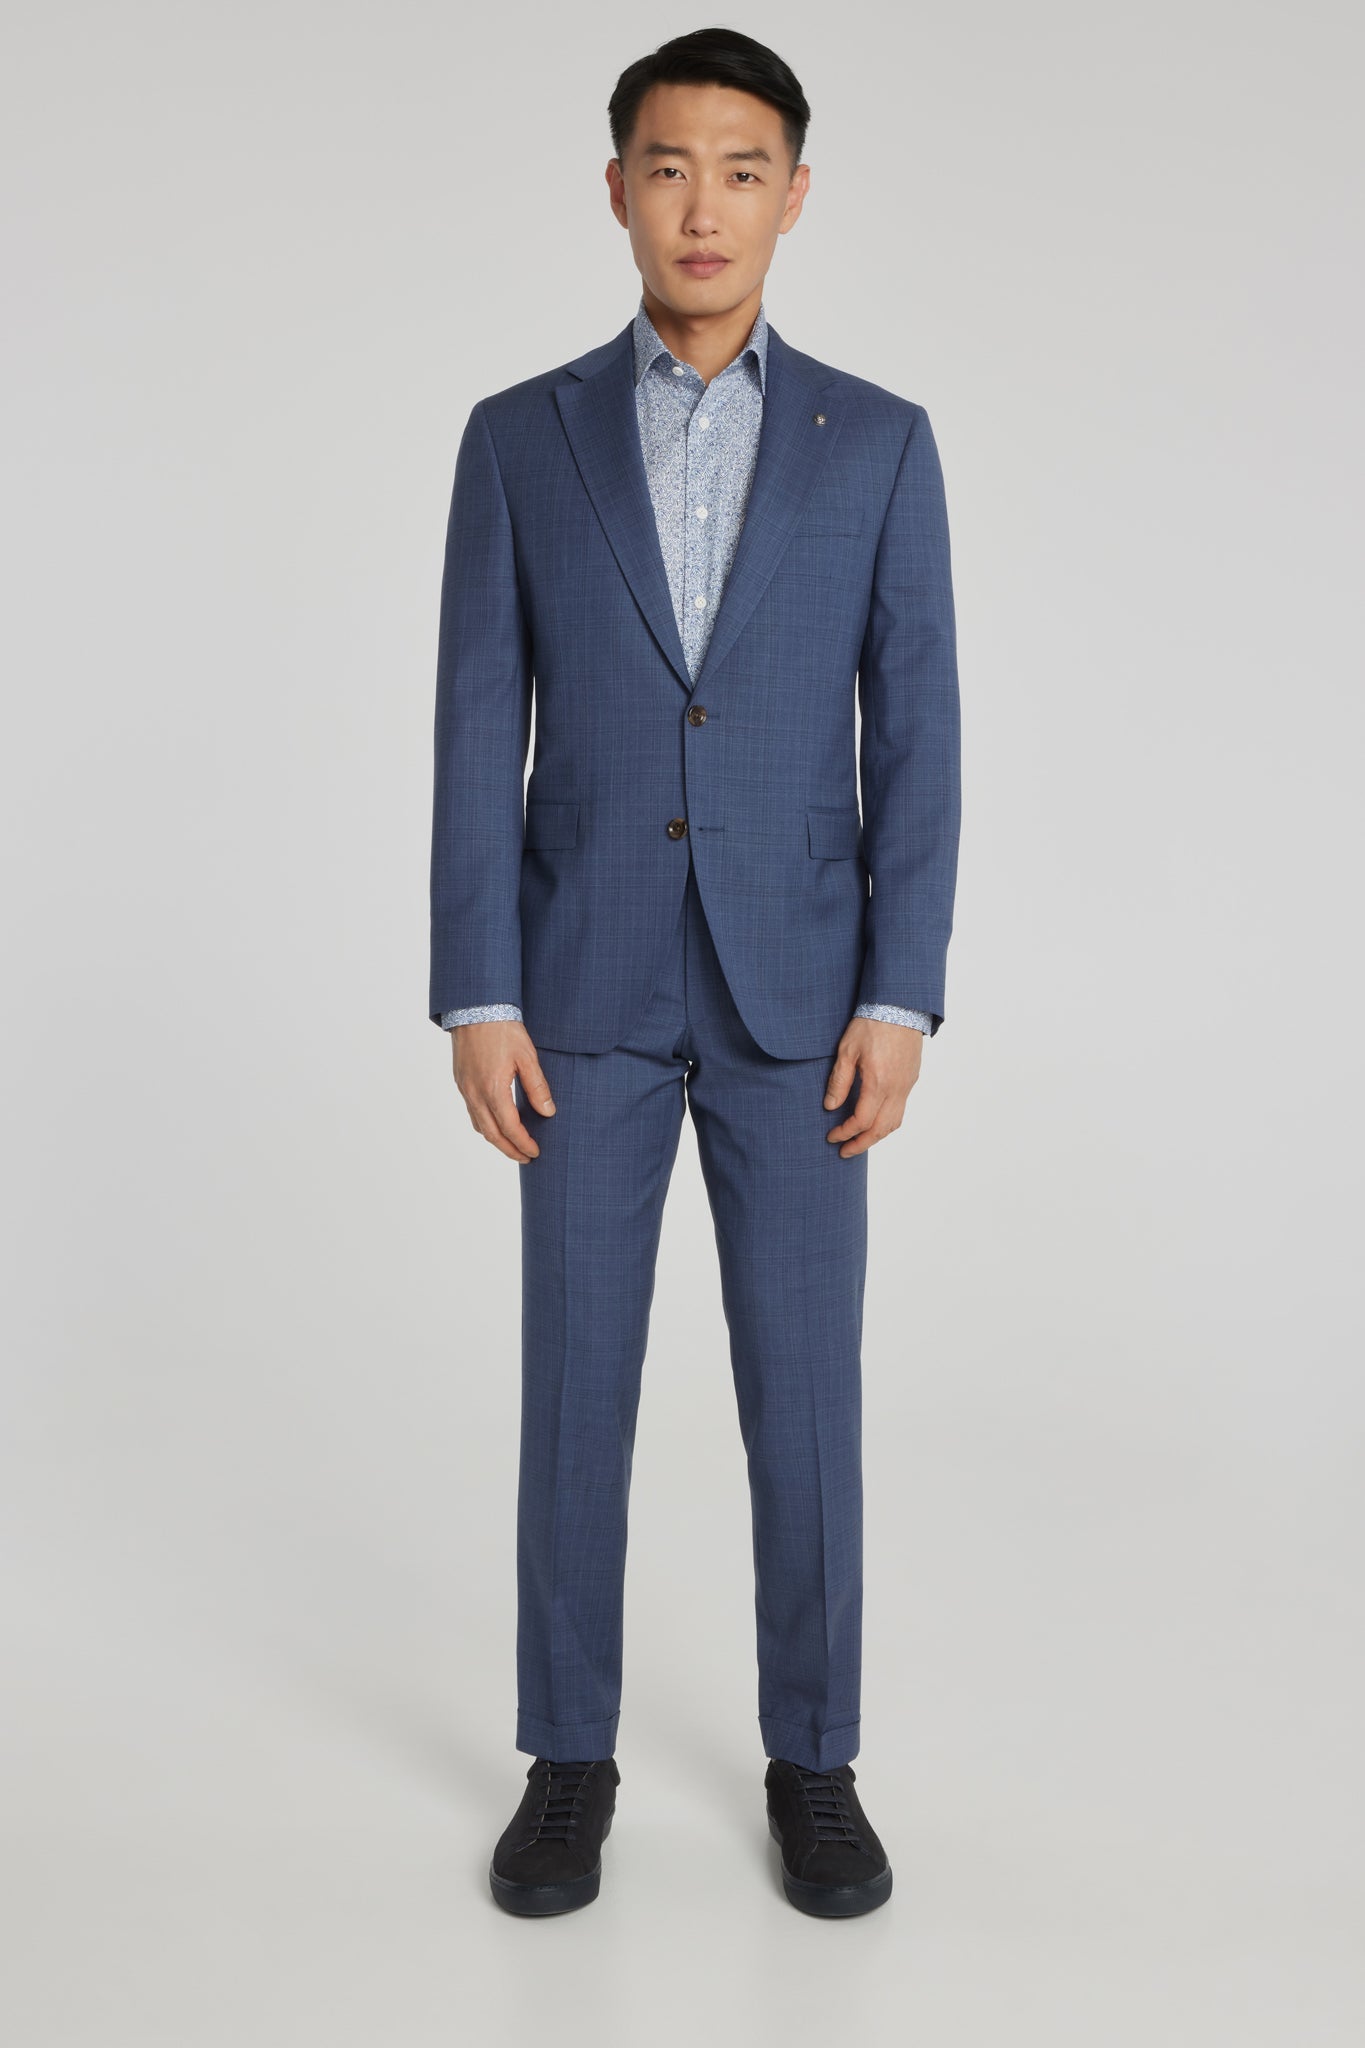 Jack Victor Men's Esprit Plaid Wool Suit in Light Grey